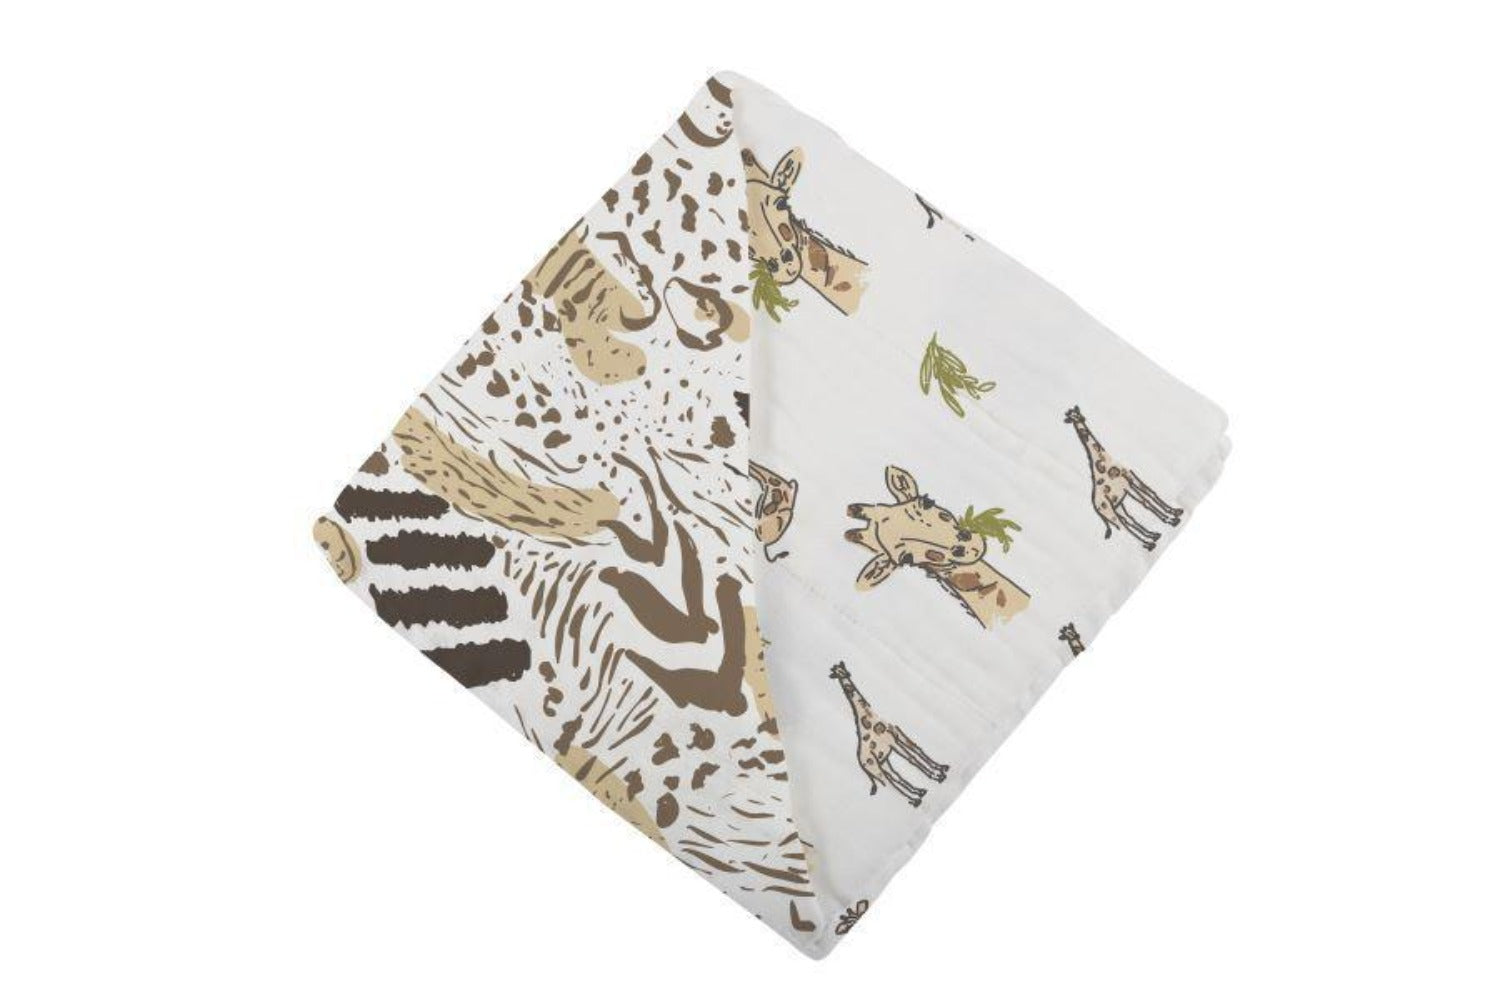 Hungry Giraffe and Animal Print Newcastle Blanket